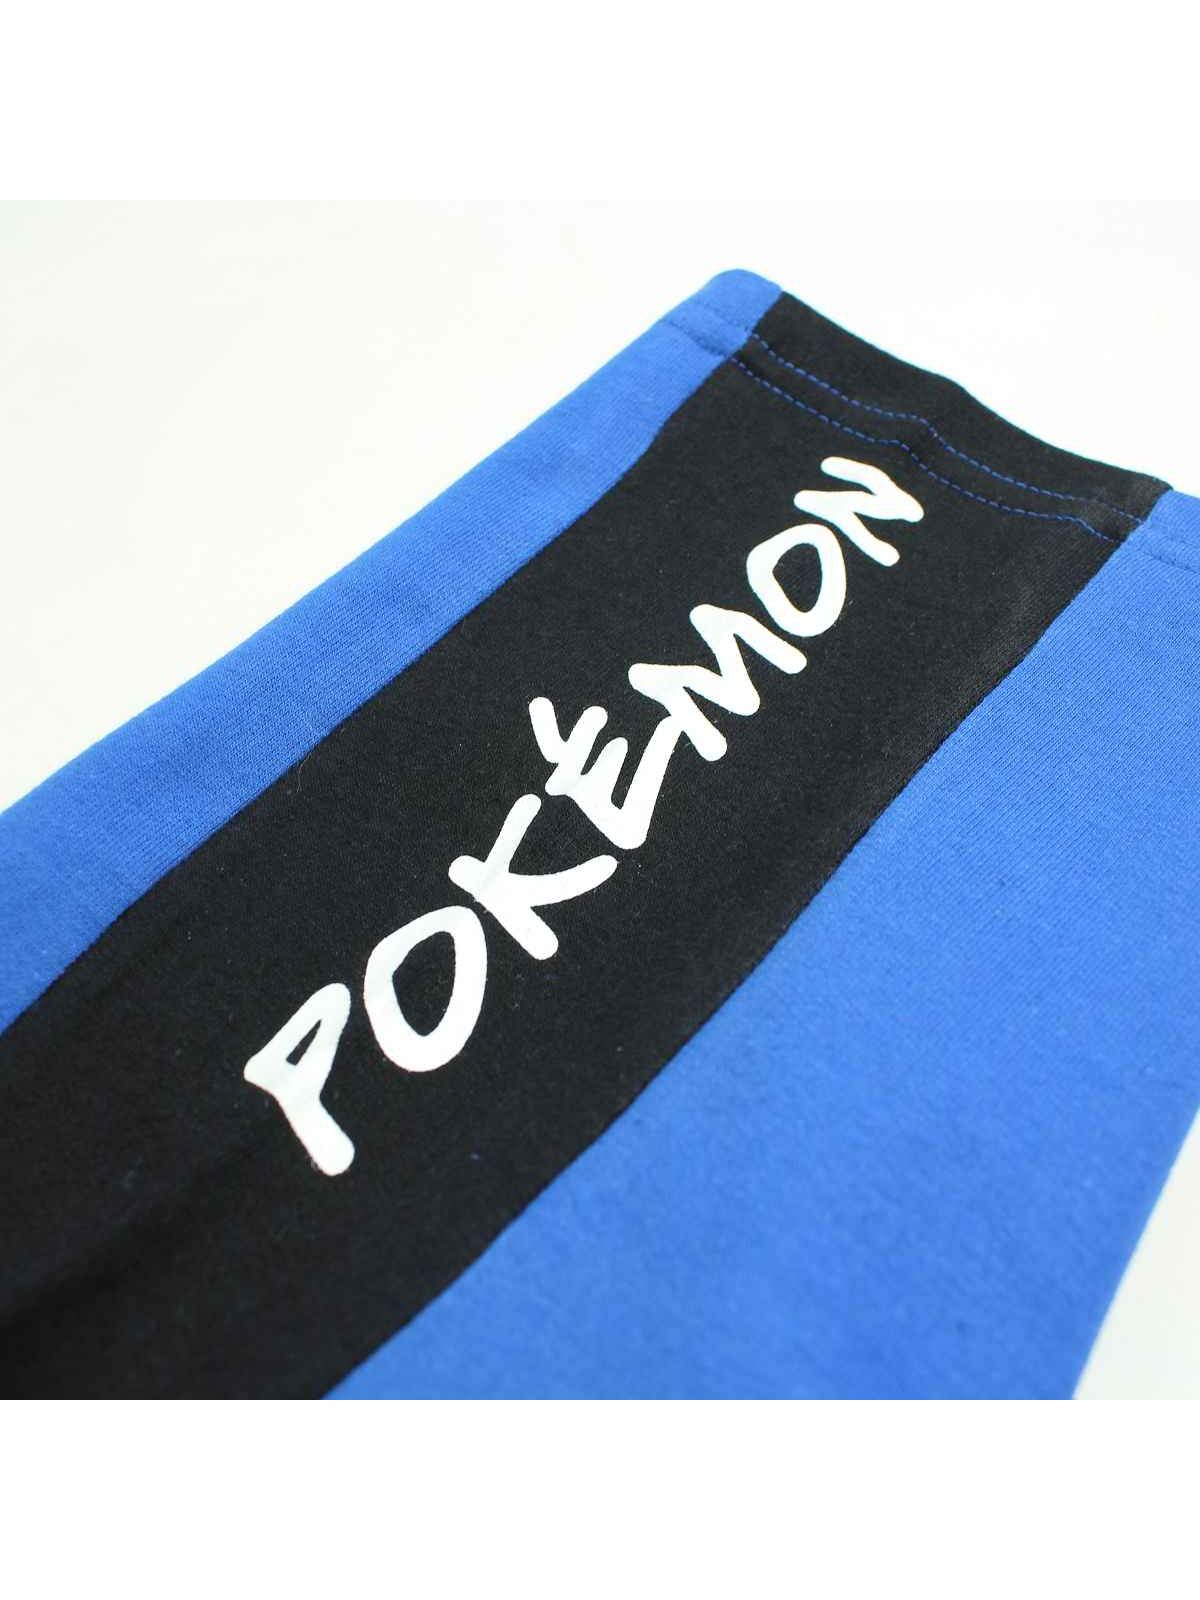 Pokemon shorts cortos